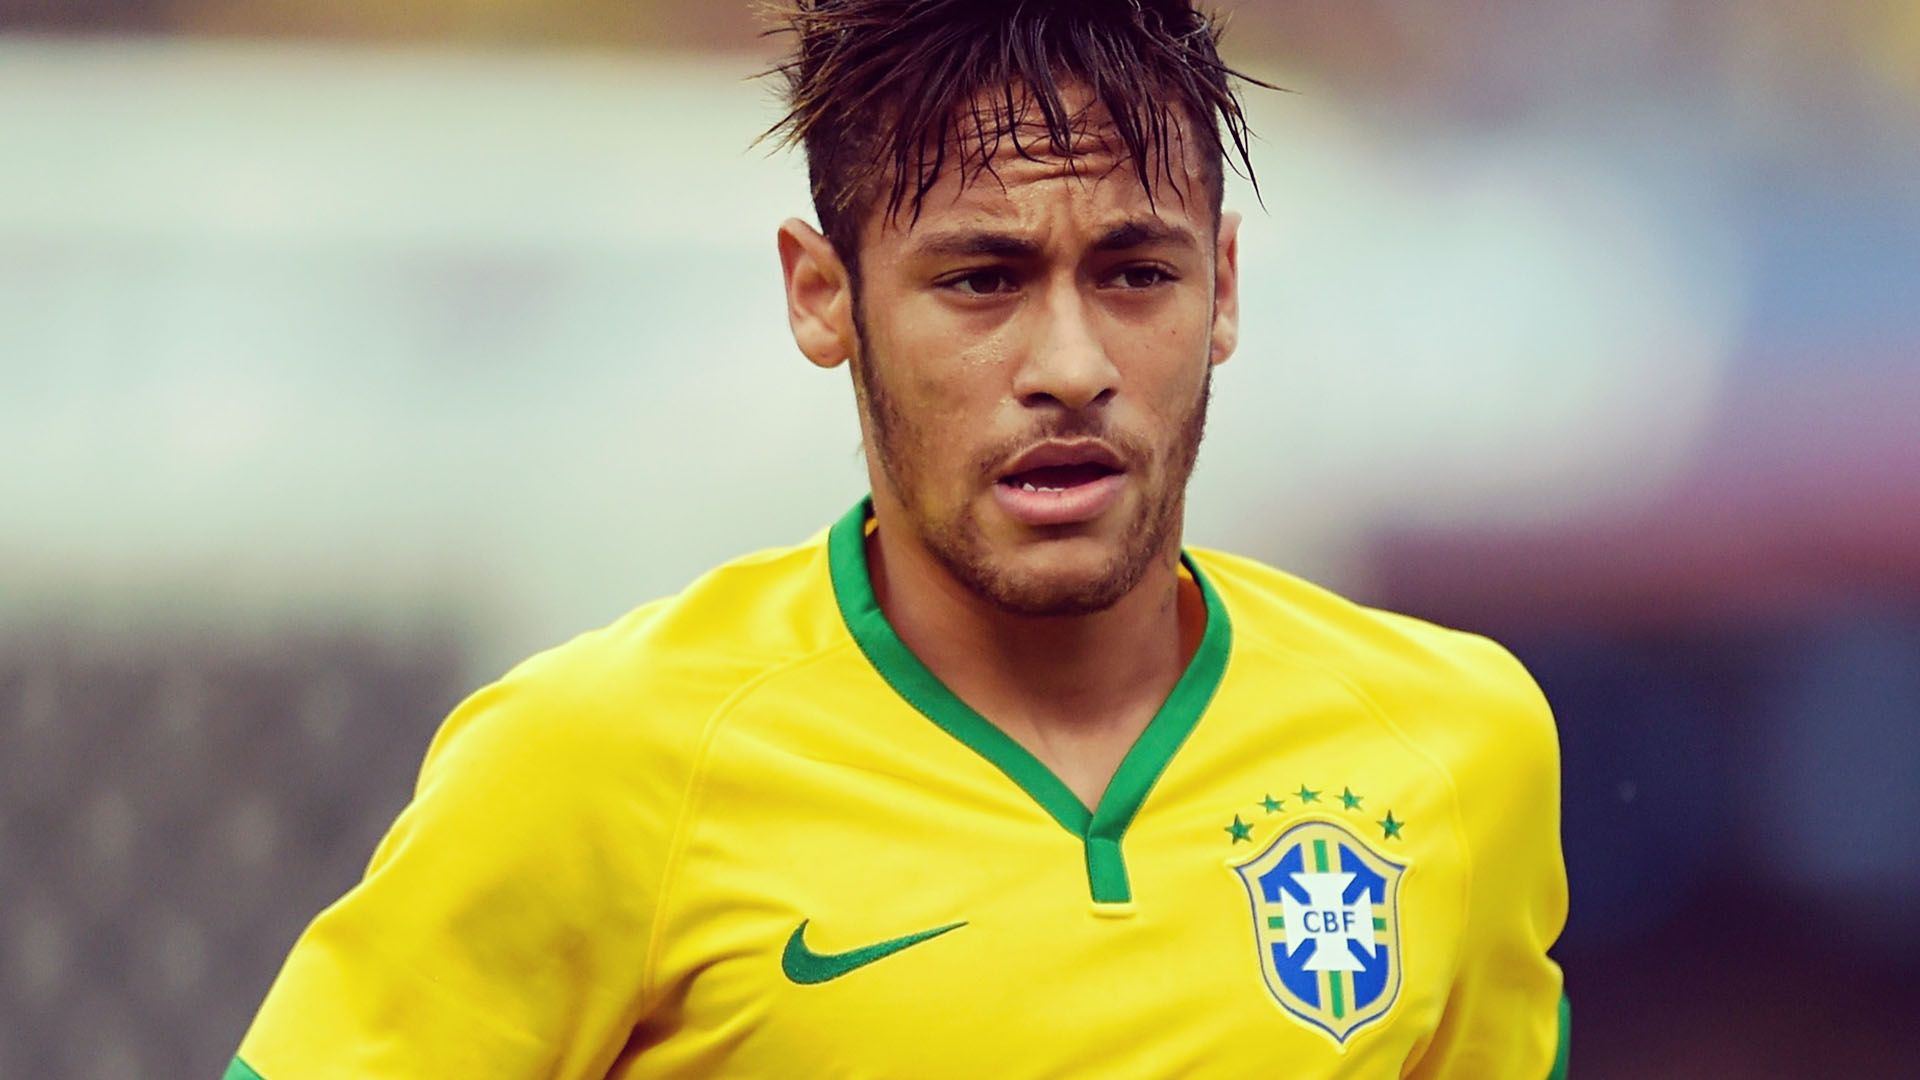 Neymar-Wallpapers-HD-Images-1080p